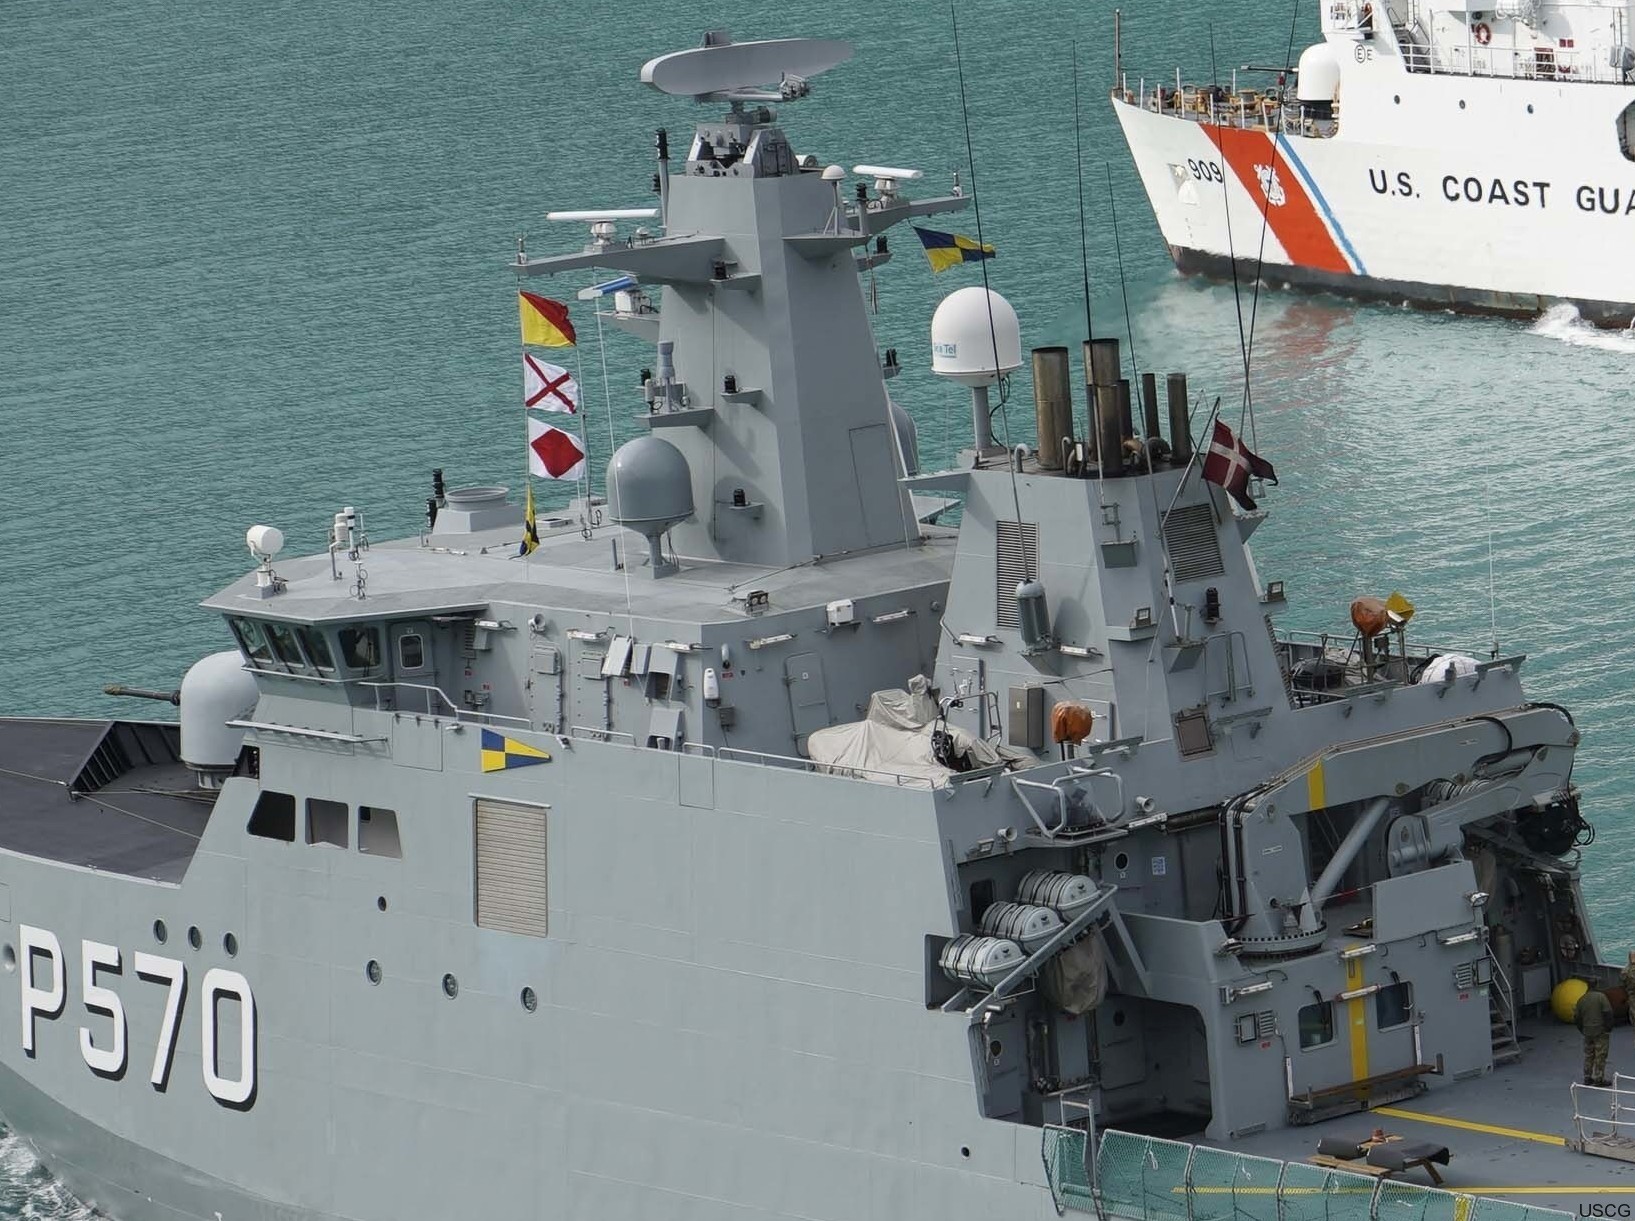 p-570 hdms knud rasmussen class offshore patrol vessel royal danish navy inspektionsfartøj 21a